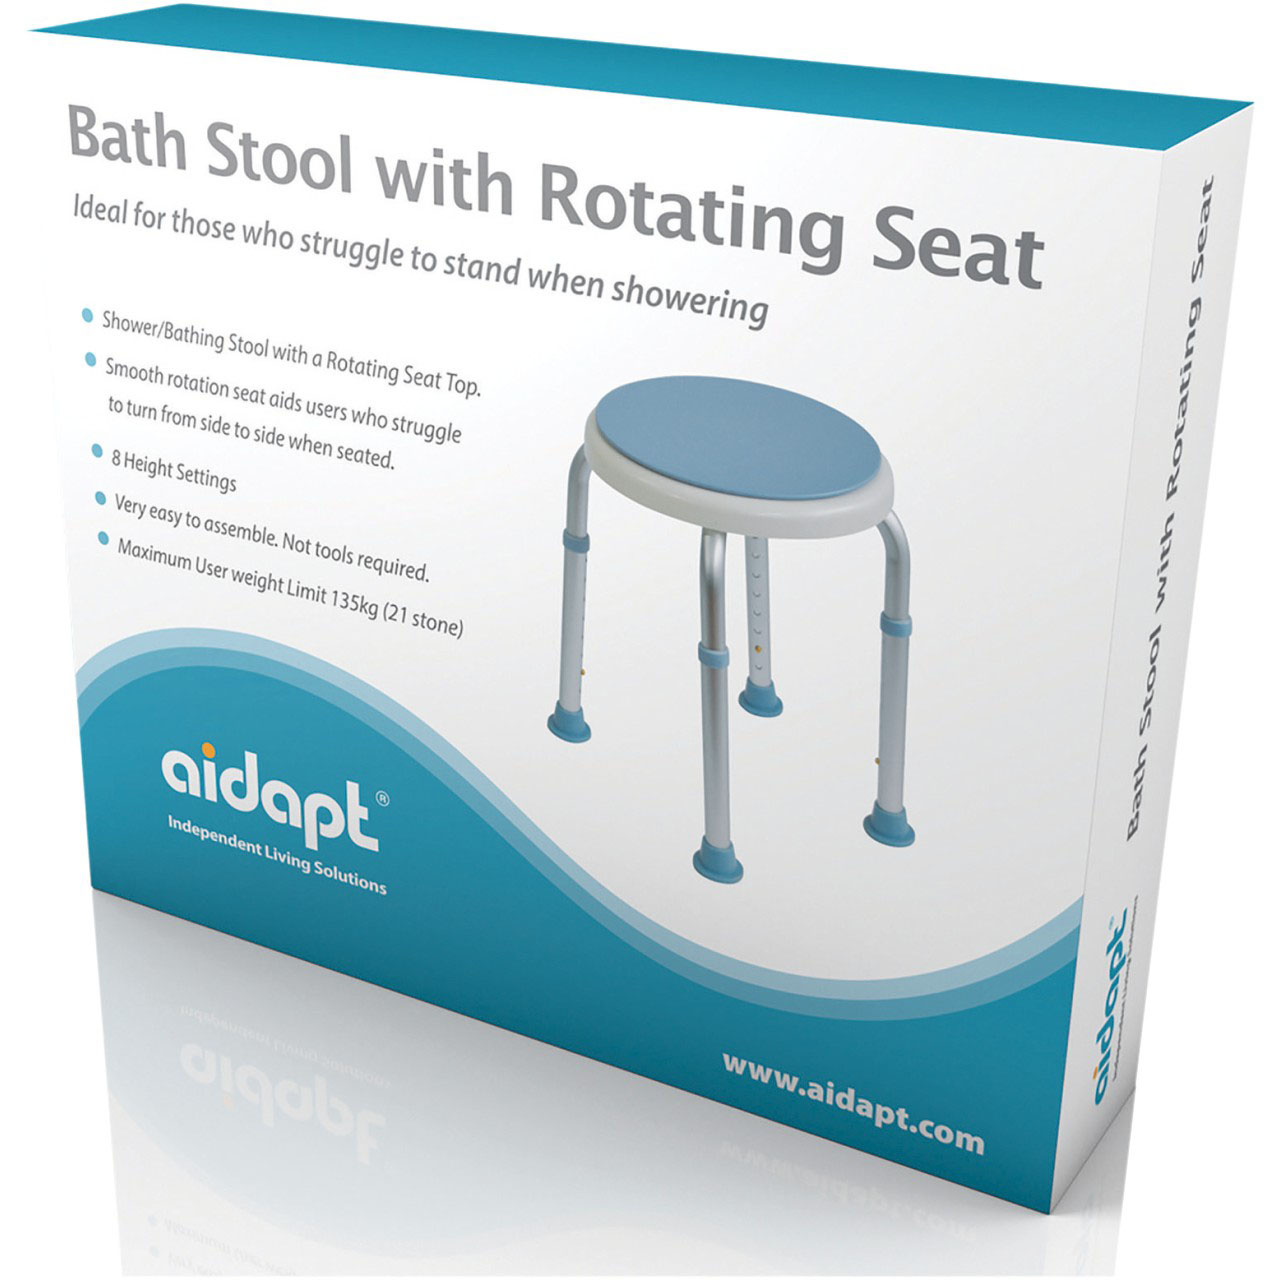 Bath Stool with rotating Seat